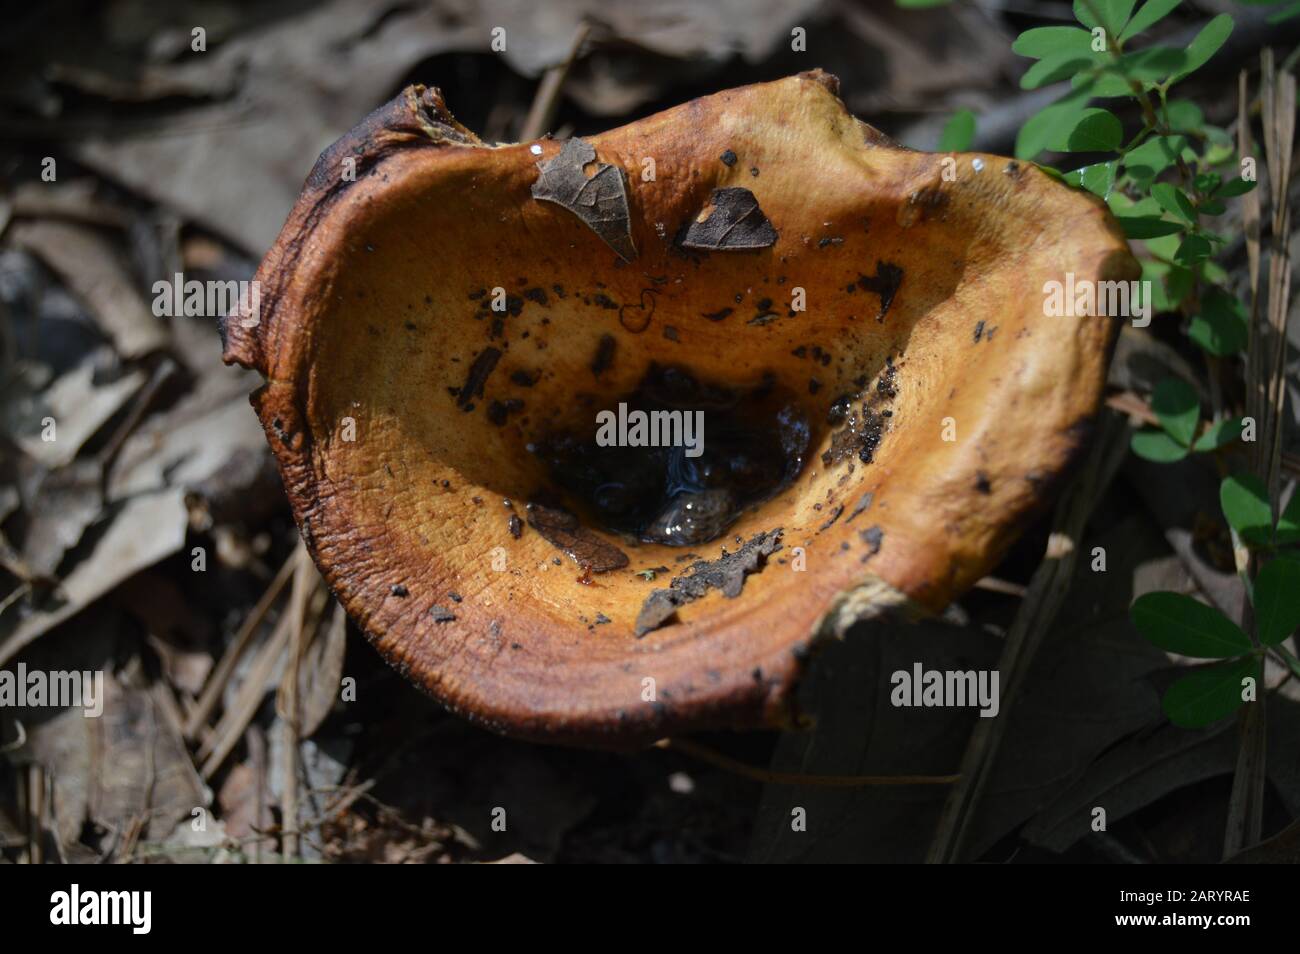 Small poisonous funnel mushroom fungus. Stock Photo